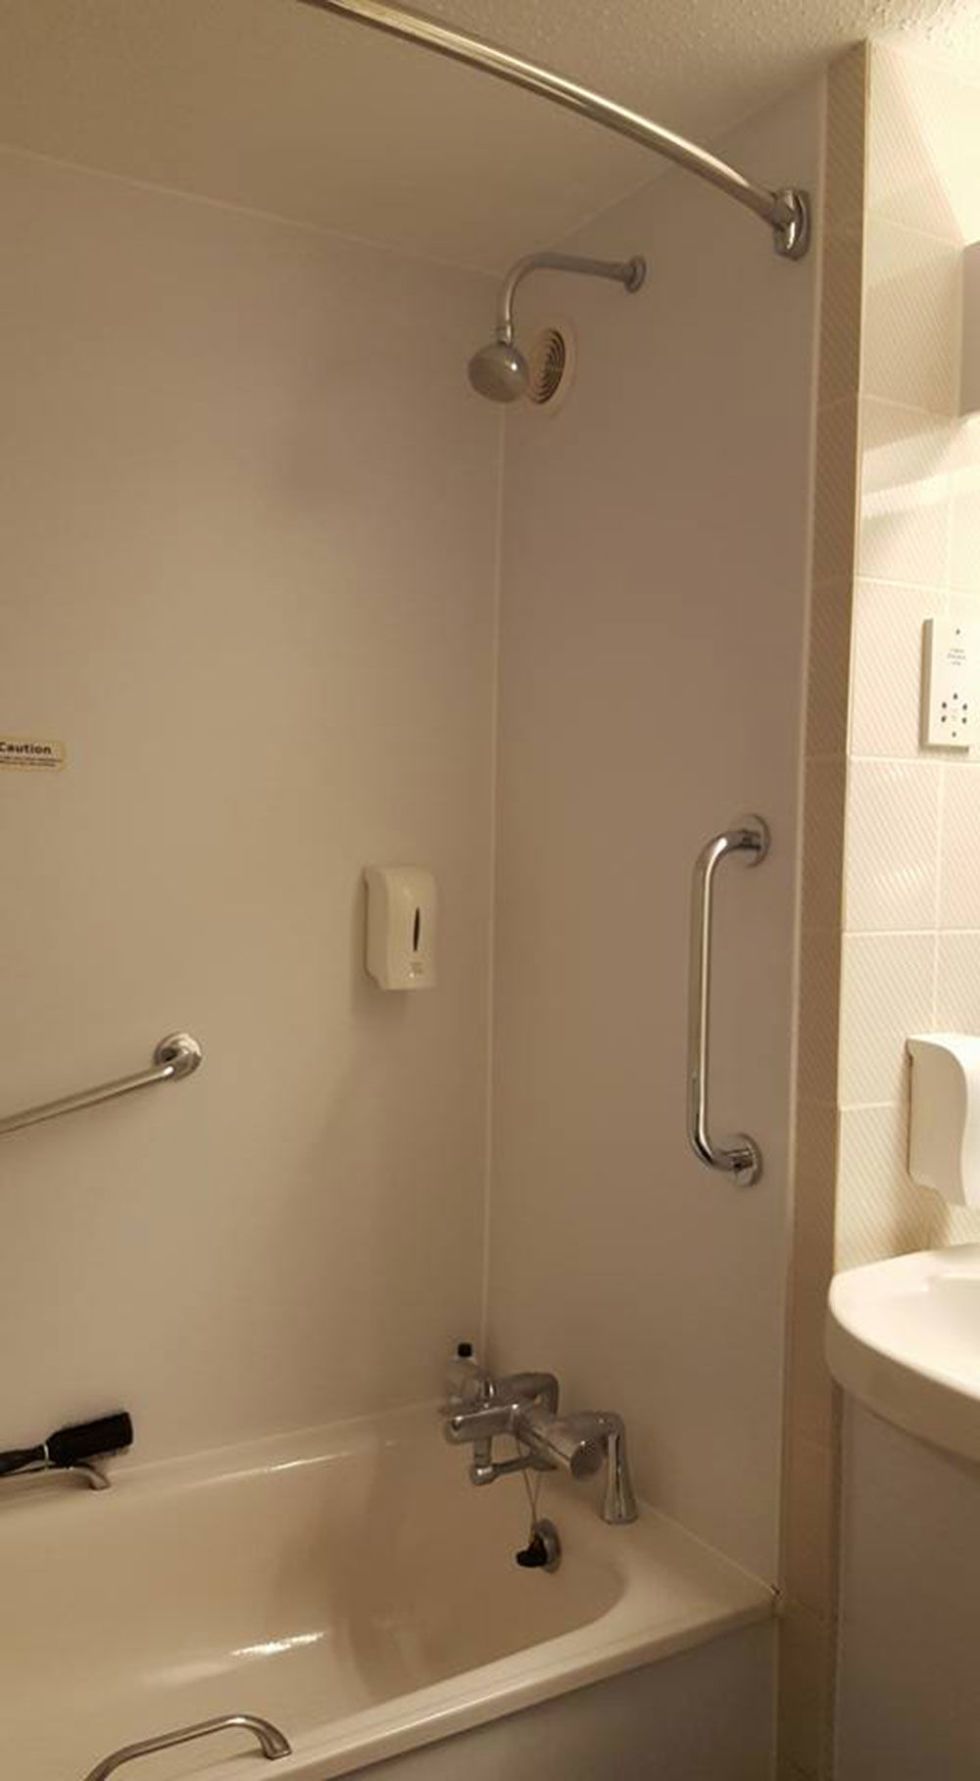 Woman being caught on hidden camera in bathroom